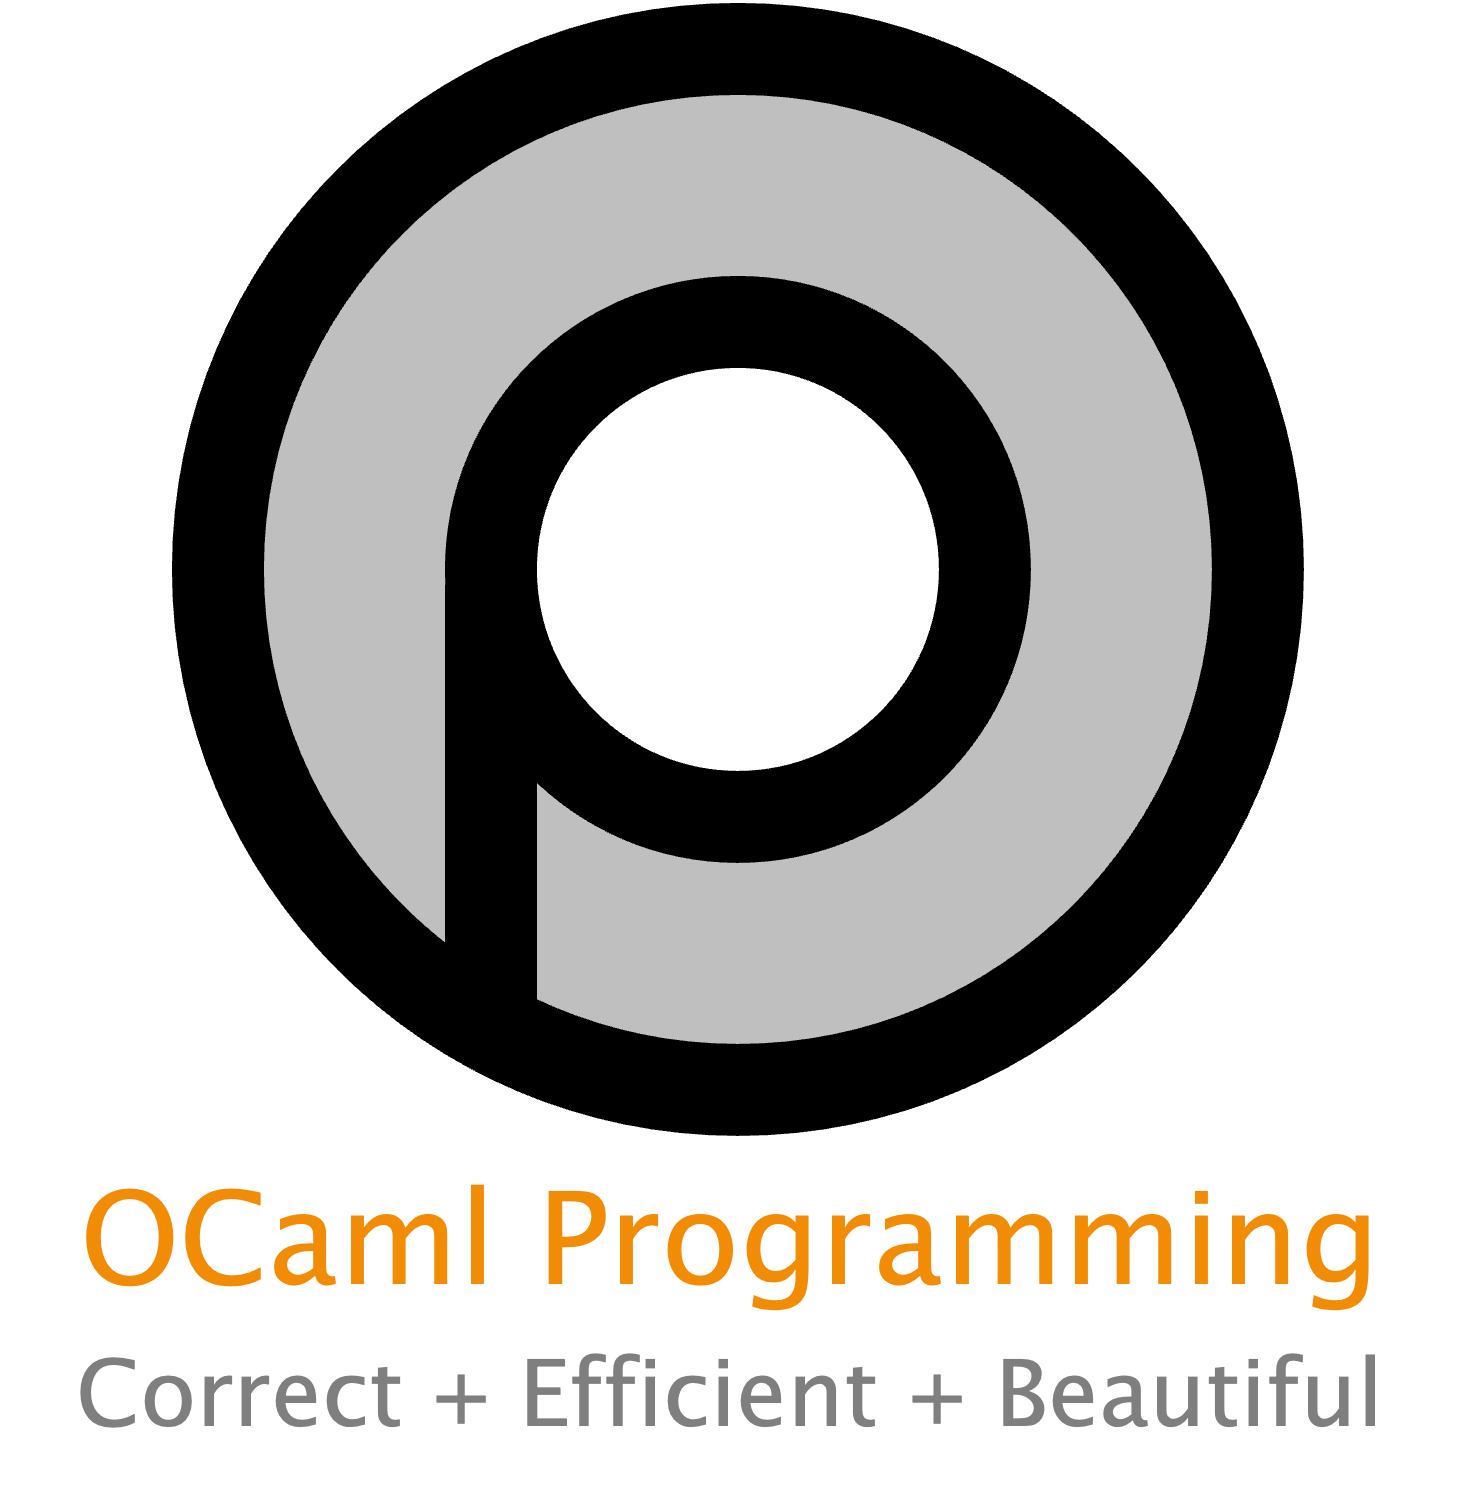 OCaml Programming: Correct + Efficient + Beautiful - Home